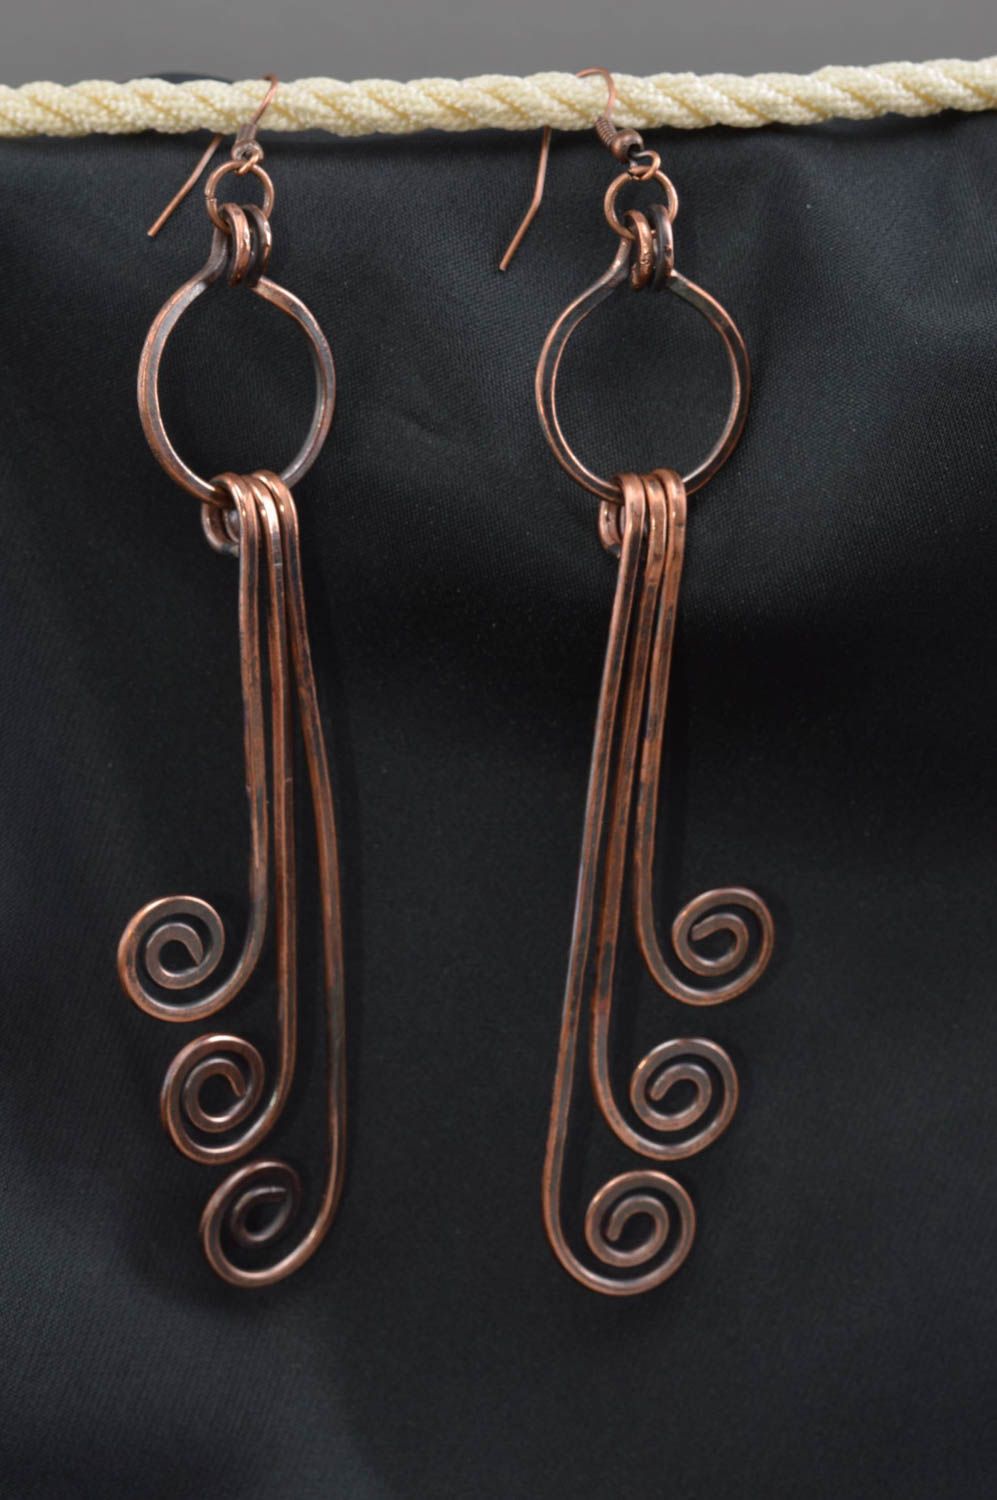 Copper earrings handmade dangling earrings fashion jewelry womens accessories photo 1